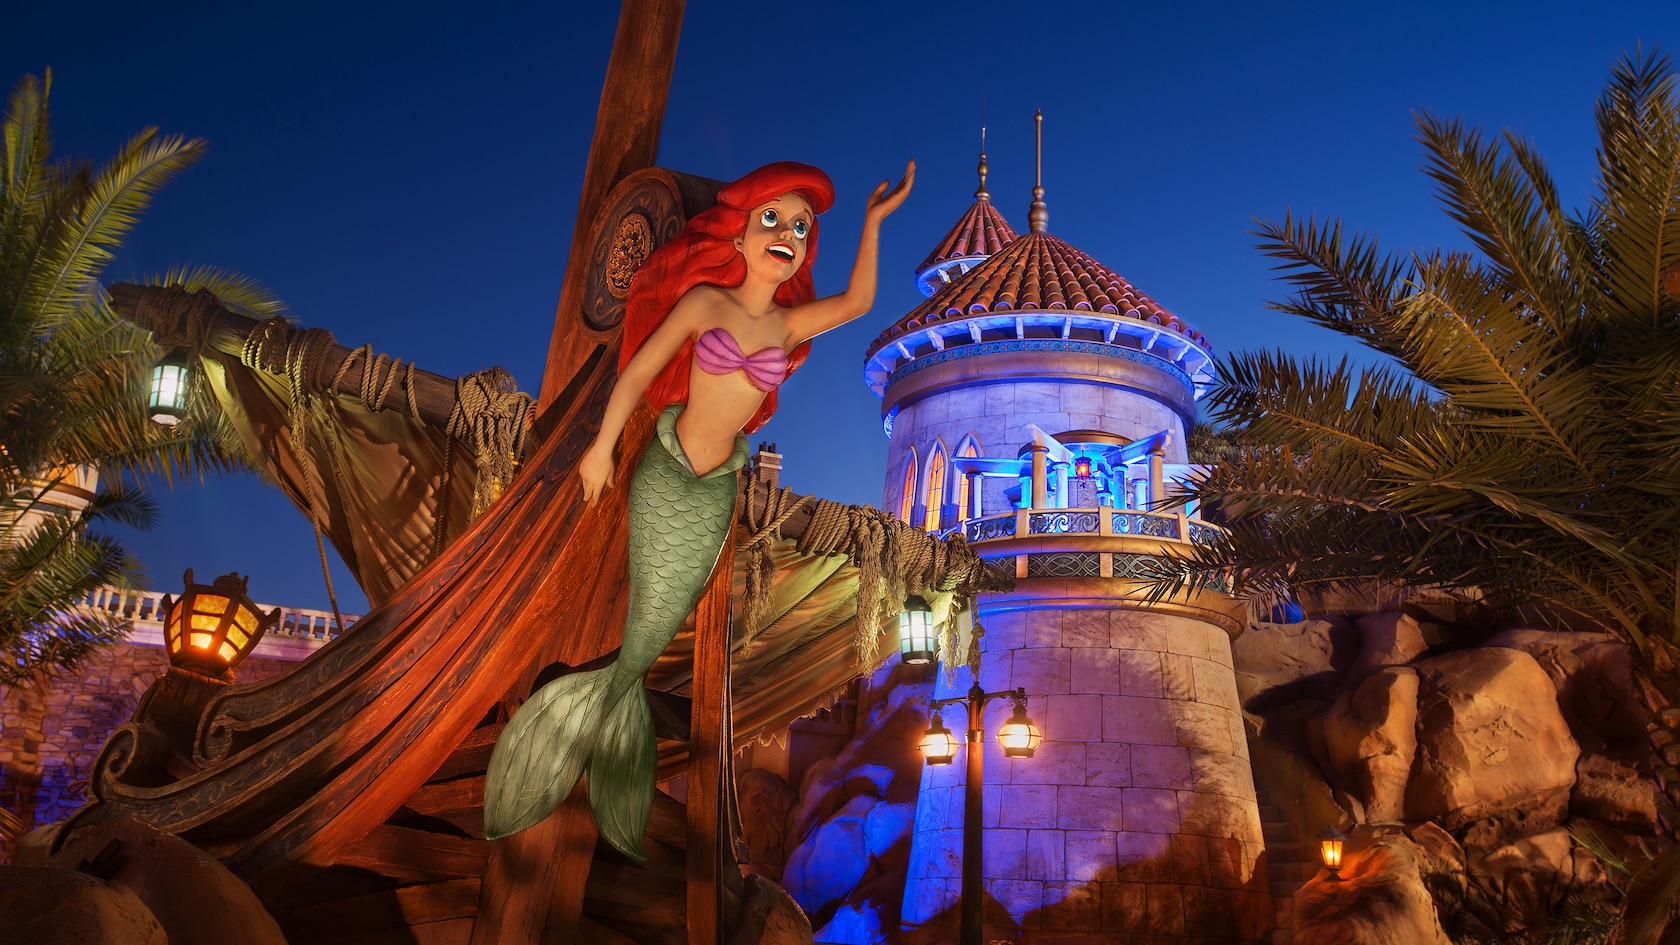 Under The Sea - Journey of the Little Mermaid | Magic Kingdom